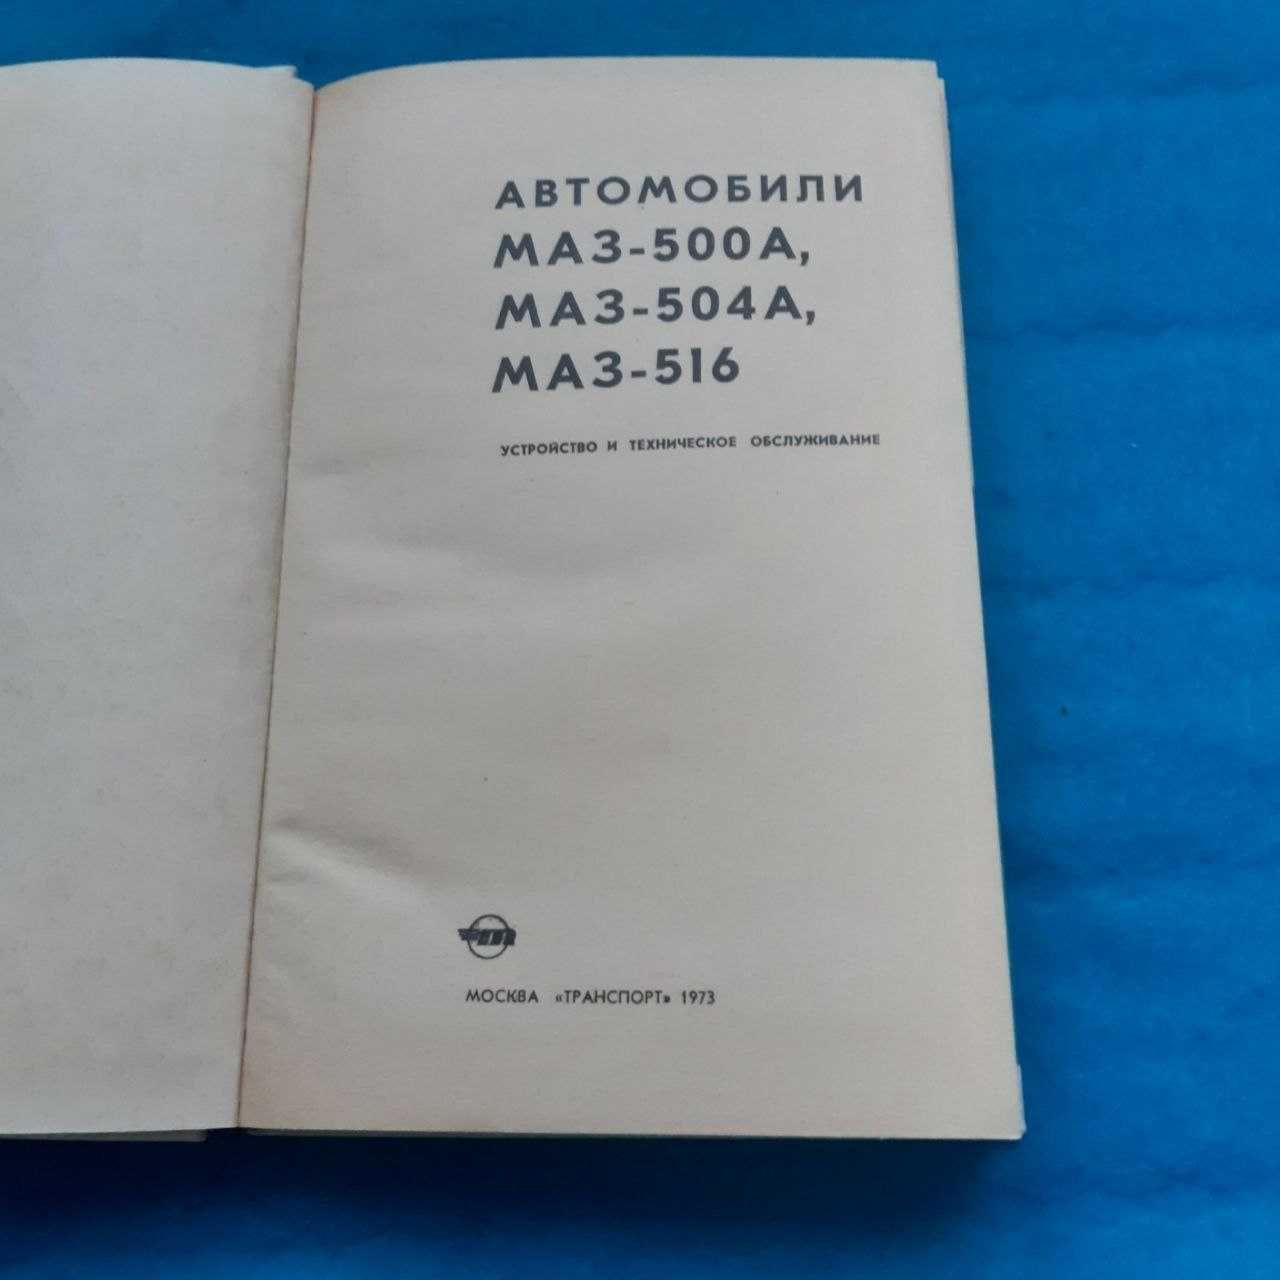 Ретро авто книга "Автомобили МАЗ-500, МАЗ-504, МАЗ-516 УстроЙство и ТО